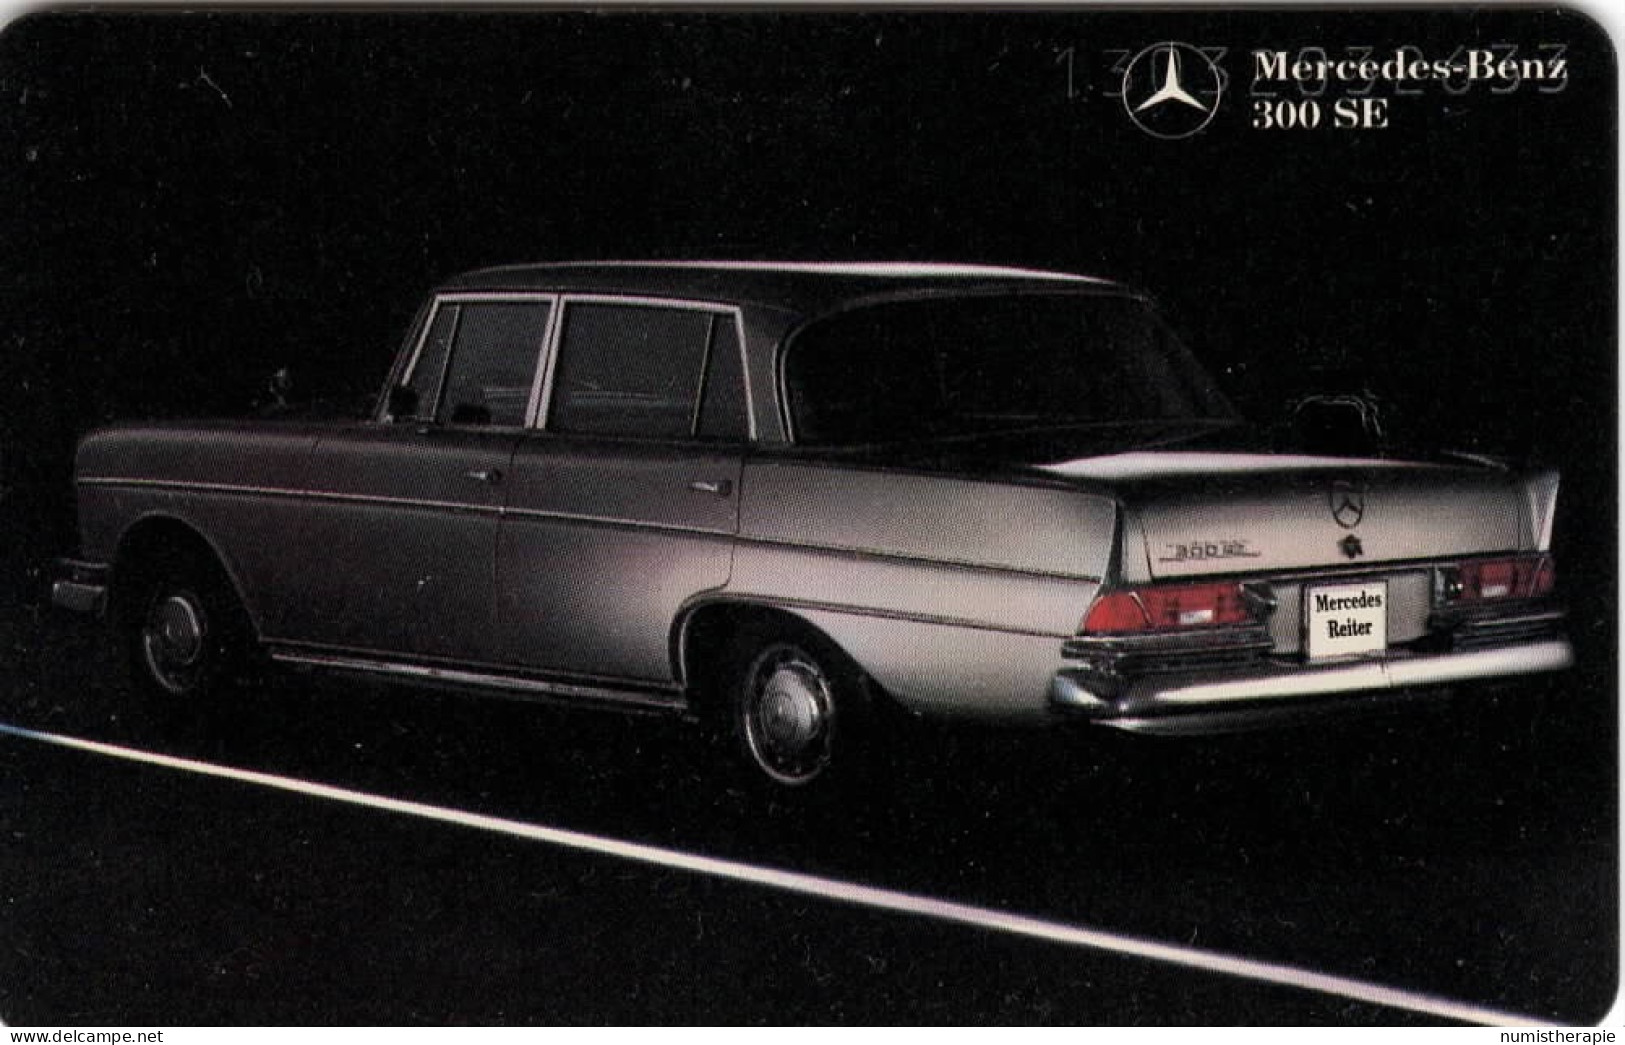 Mercedez Benz 300 SE : Telefonkarte 6 DM 1993 - Cars